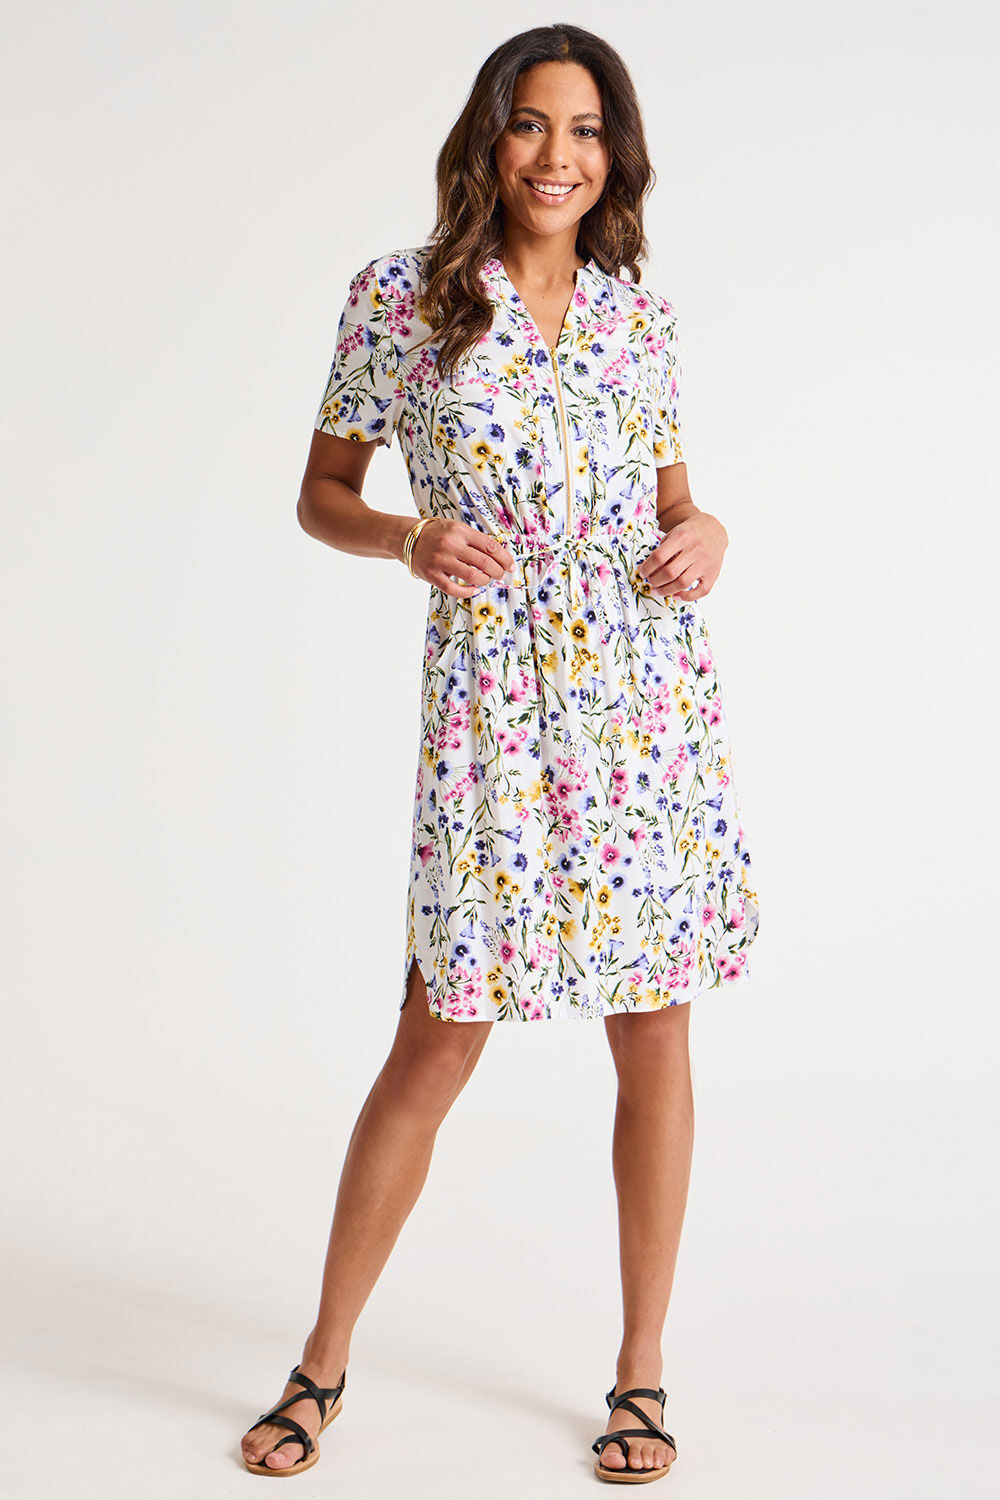 Bonmarche Ivory Short Sleeve Floral Print Zip Front Dress, Size: 12